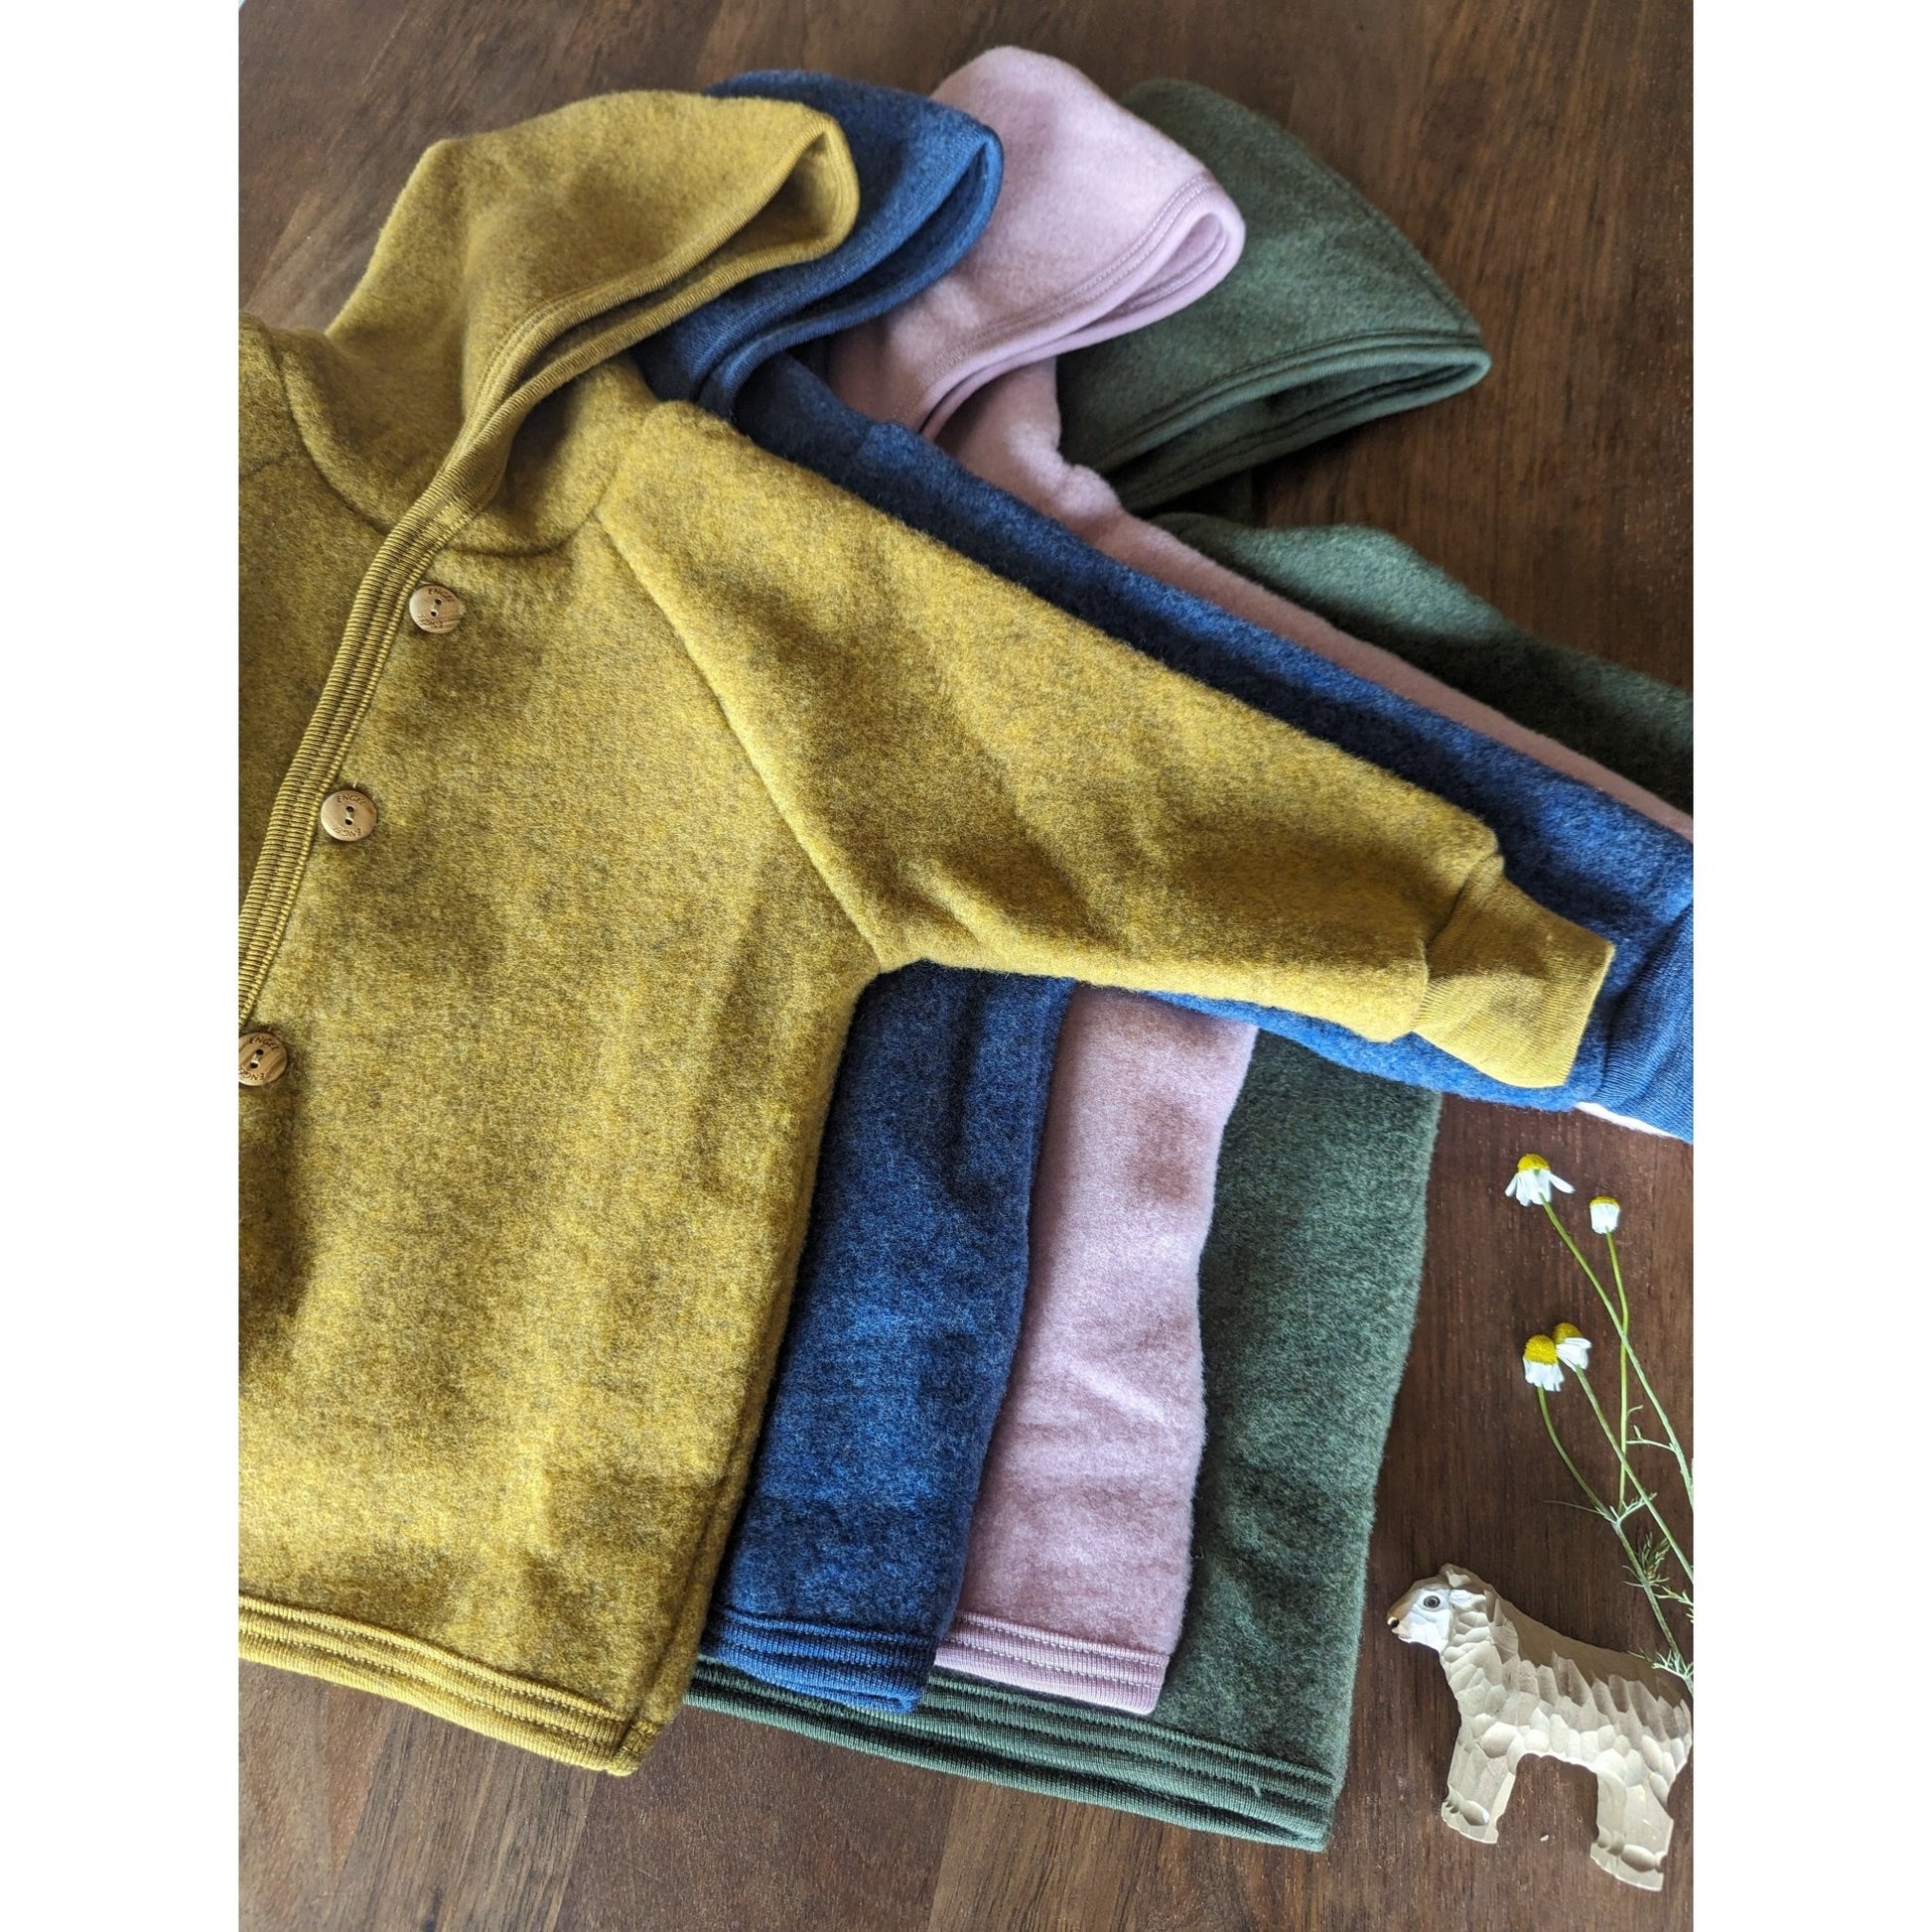 Engel - Organic Wool Fleece Jacket for Babies and Kids - Nature's Wild Child